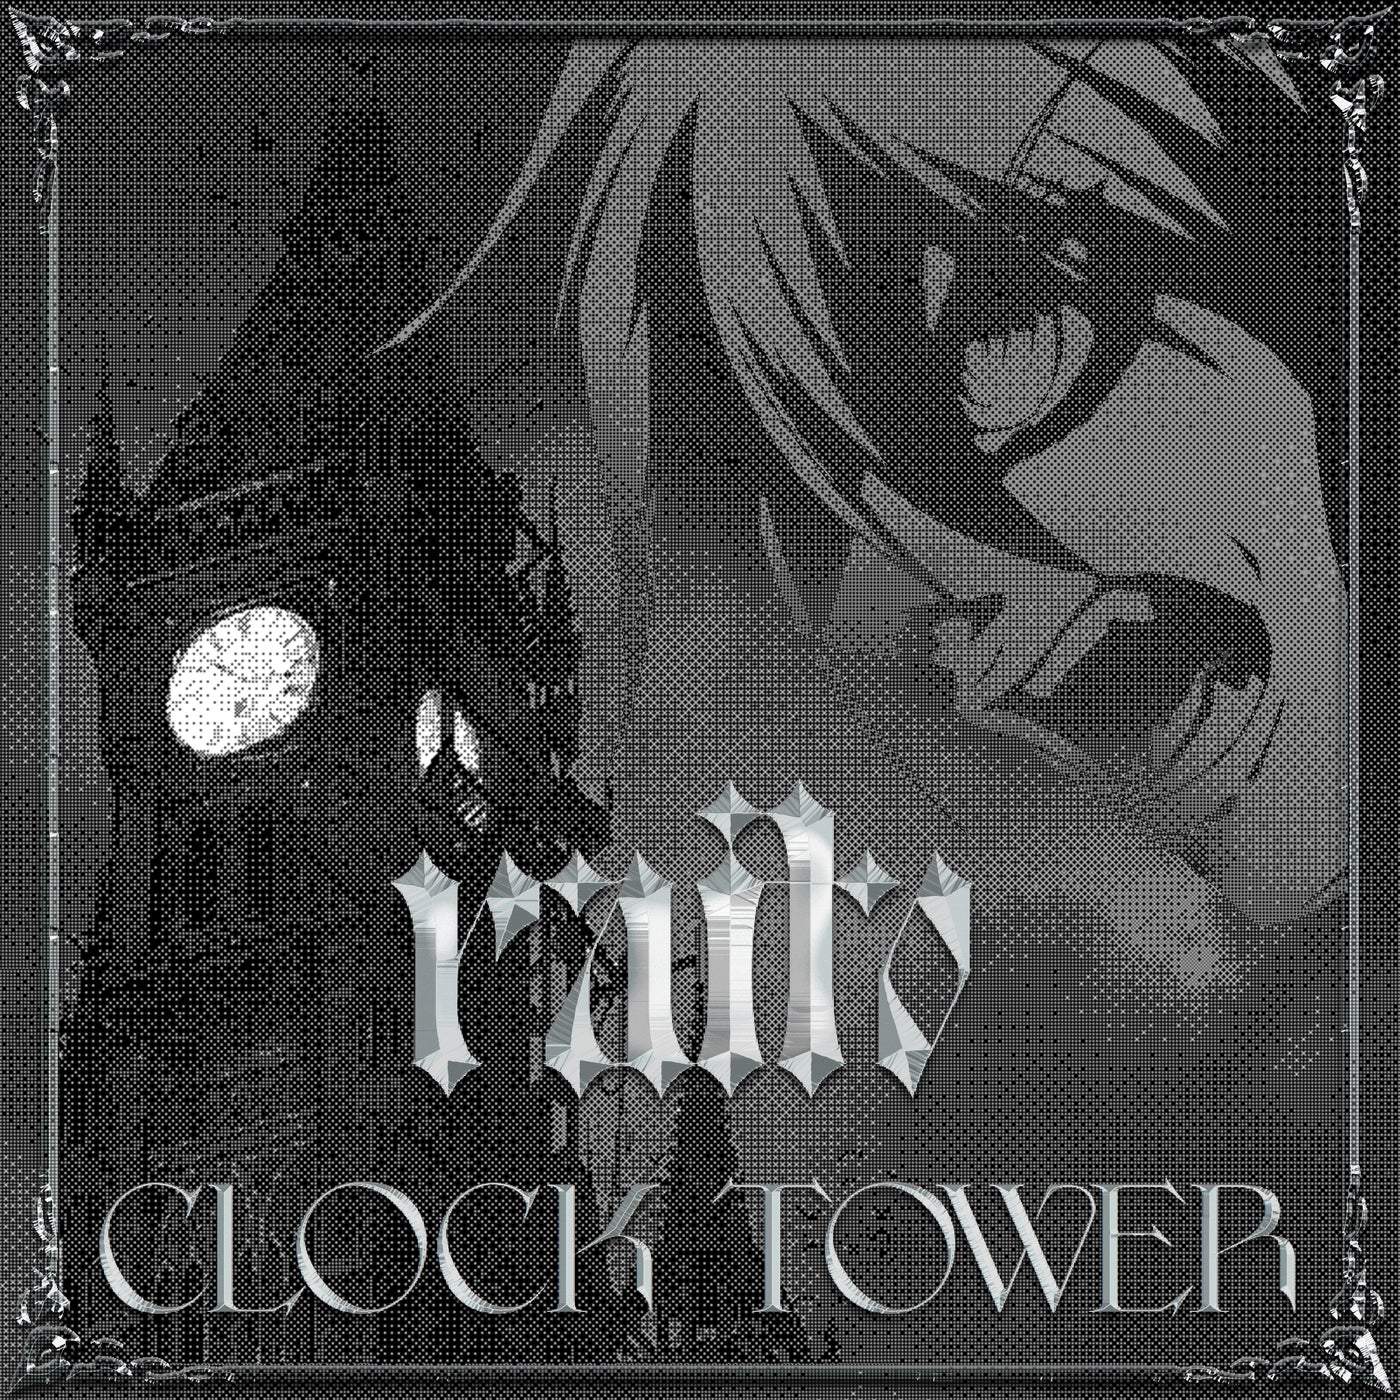 image cover: Raito - Clock Tower EP / UL03831